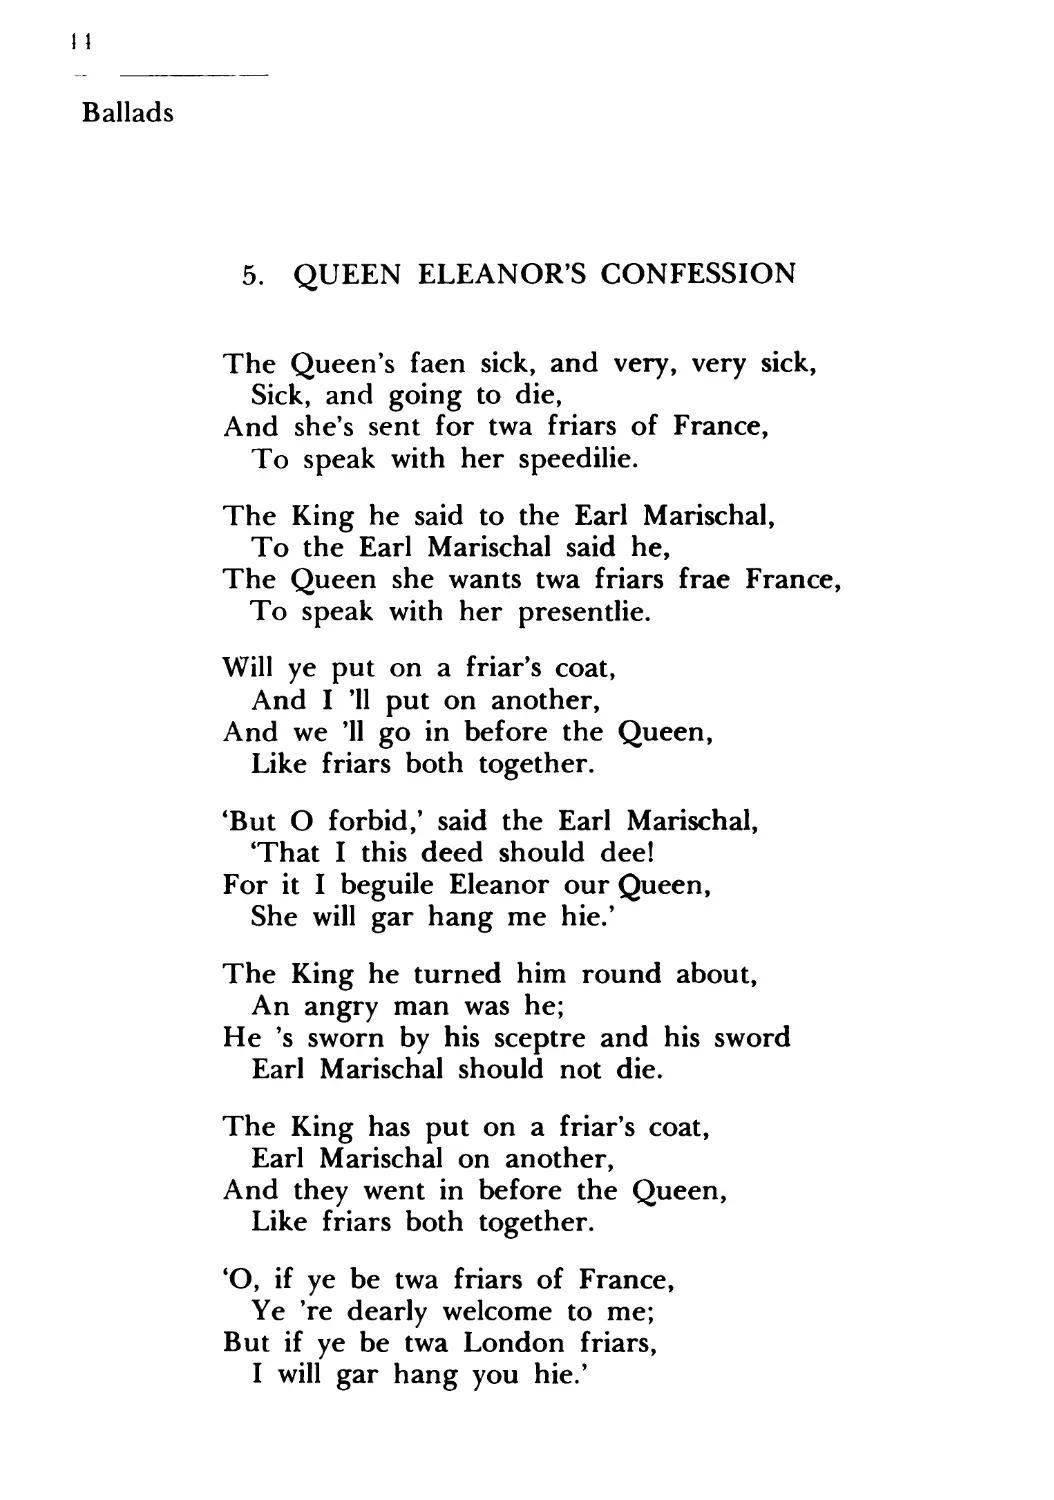 5. Queen Eleanor's Confession